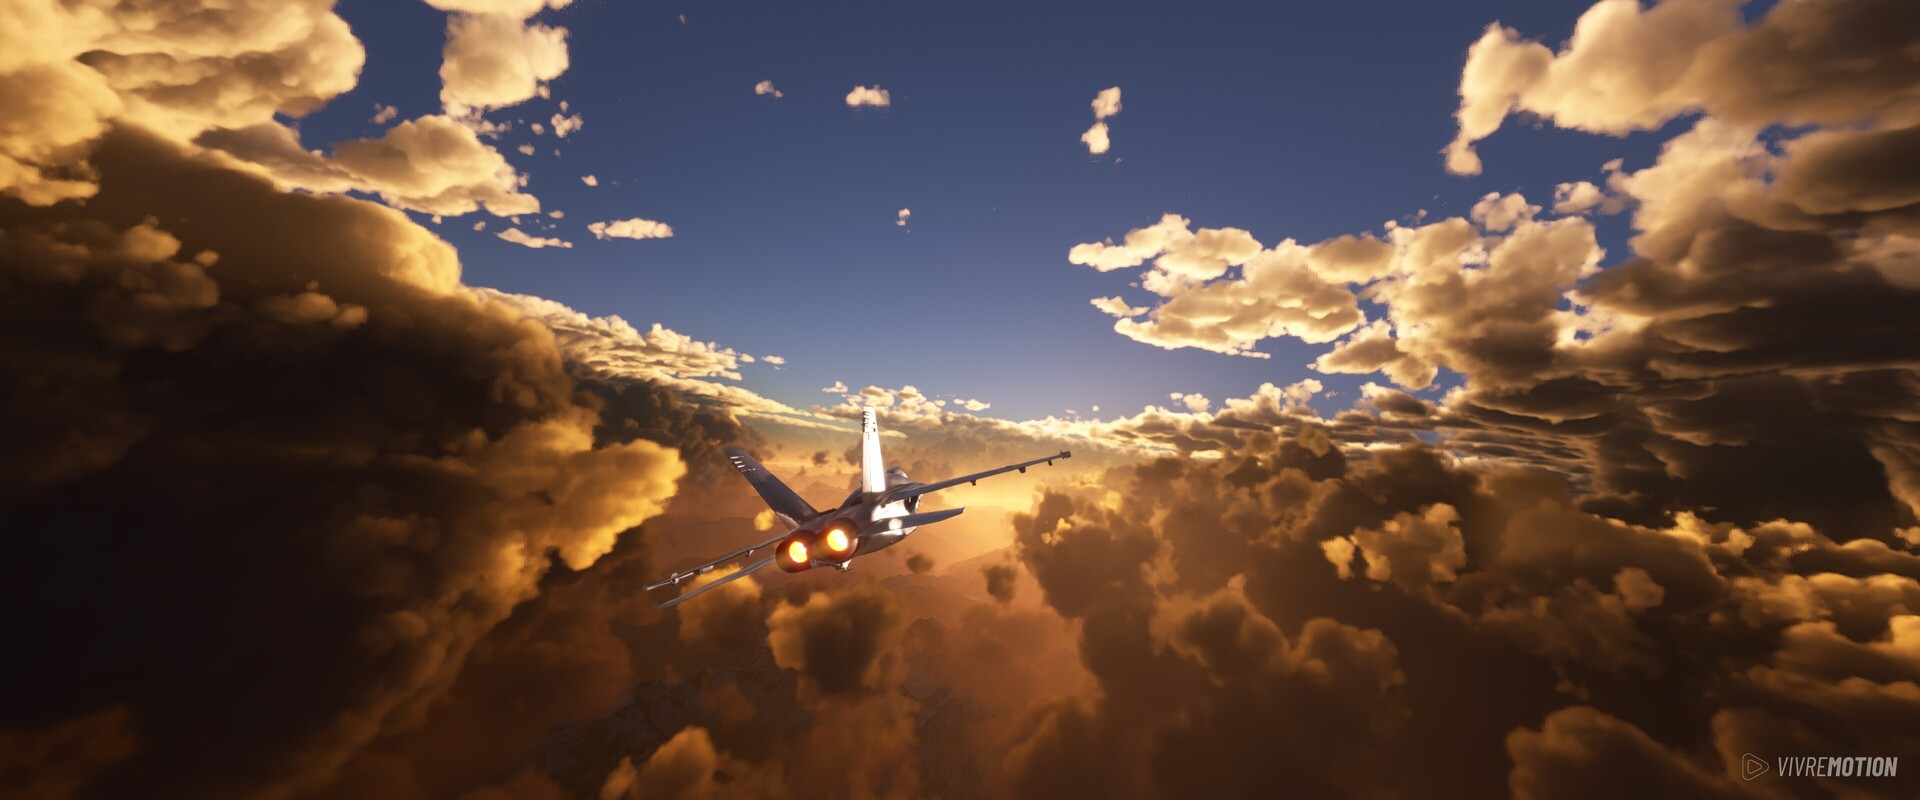 Into the Clouds - Boeing F/A-18 Super Hornet - Microsoft Flight Simulator - VIVRE-MOTION